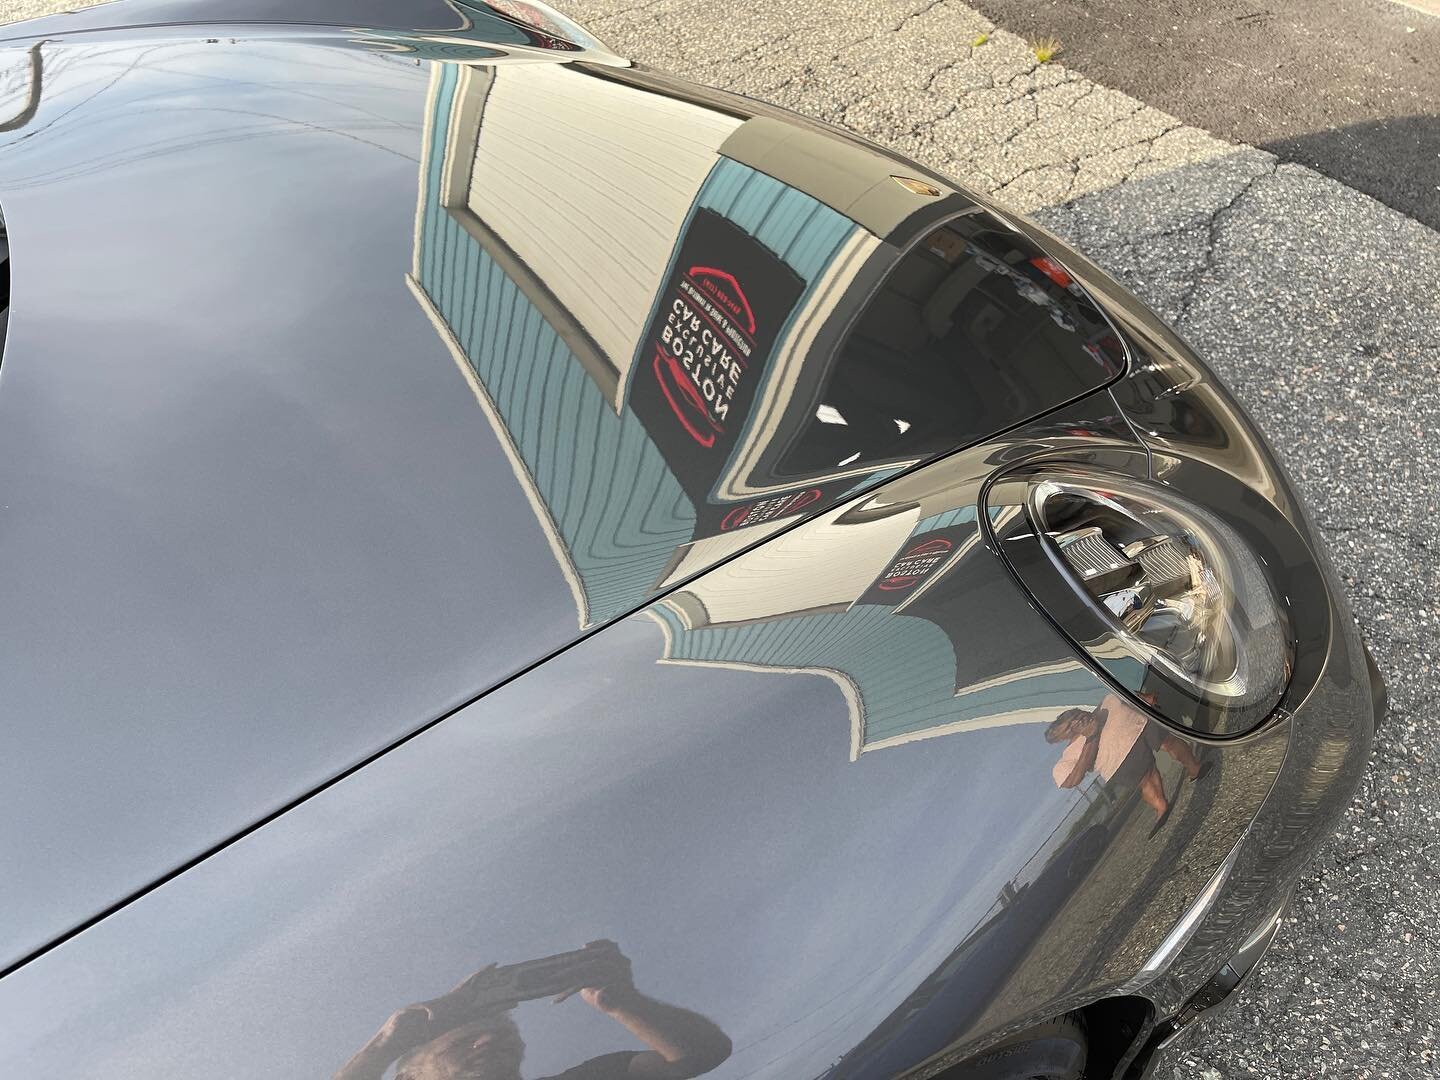 Porsche 911 - paint polished to perfection. Contact us to have your car polished to perfection and coated. Located in Woburn, MA. 

#porsche #porsche911 #bostonexclusive #bostoncars #bostoncarspotting #boston #massachusetts